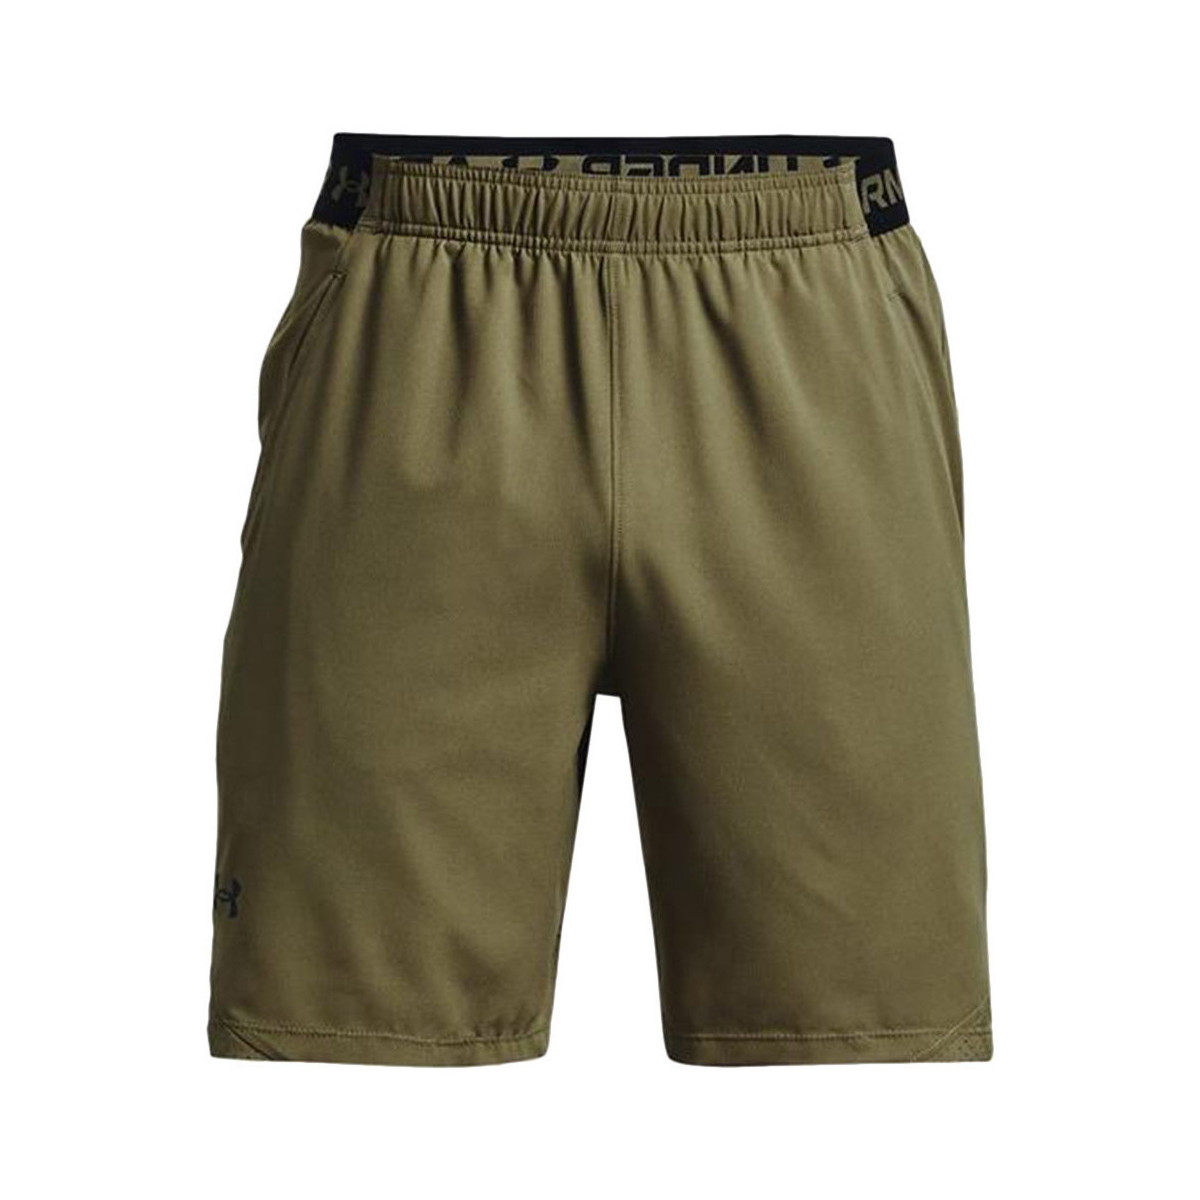 Vêtements Homme Shorts / Bermudas Under Armour VANISH WOVEN Vert